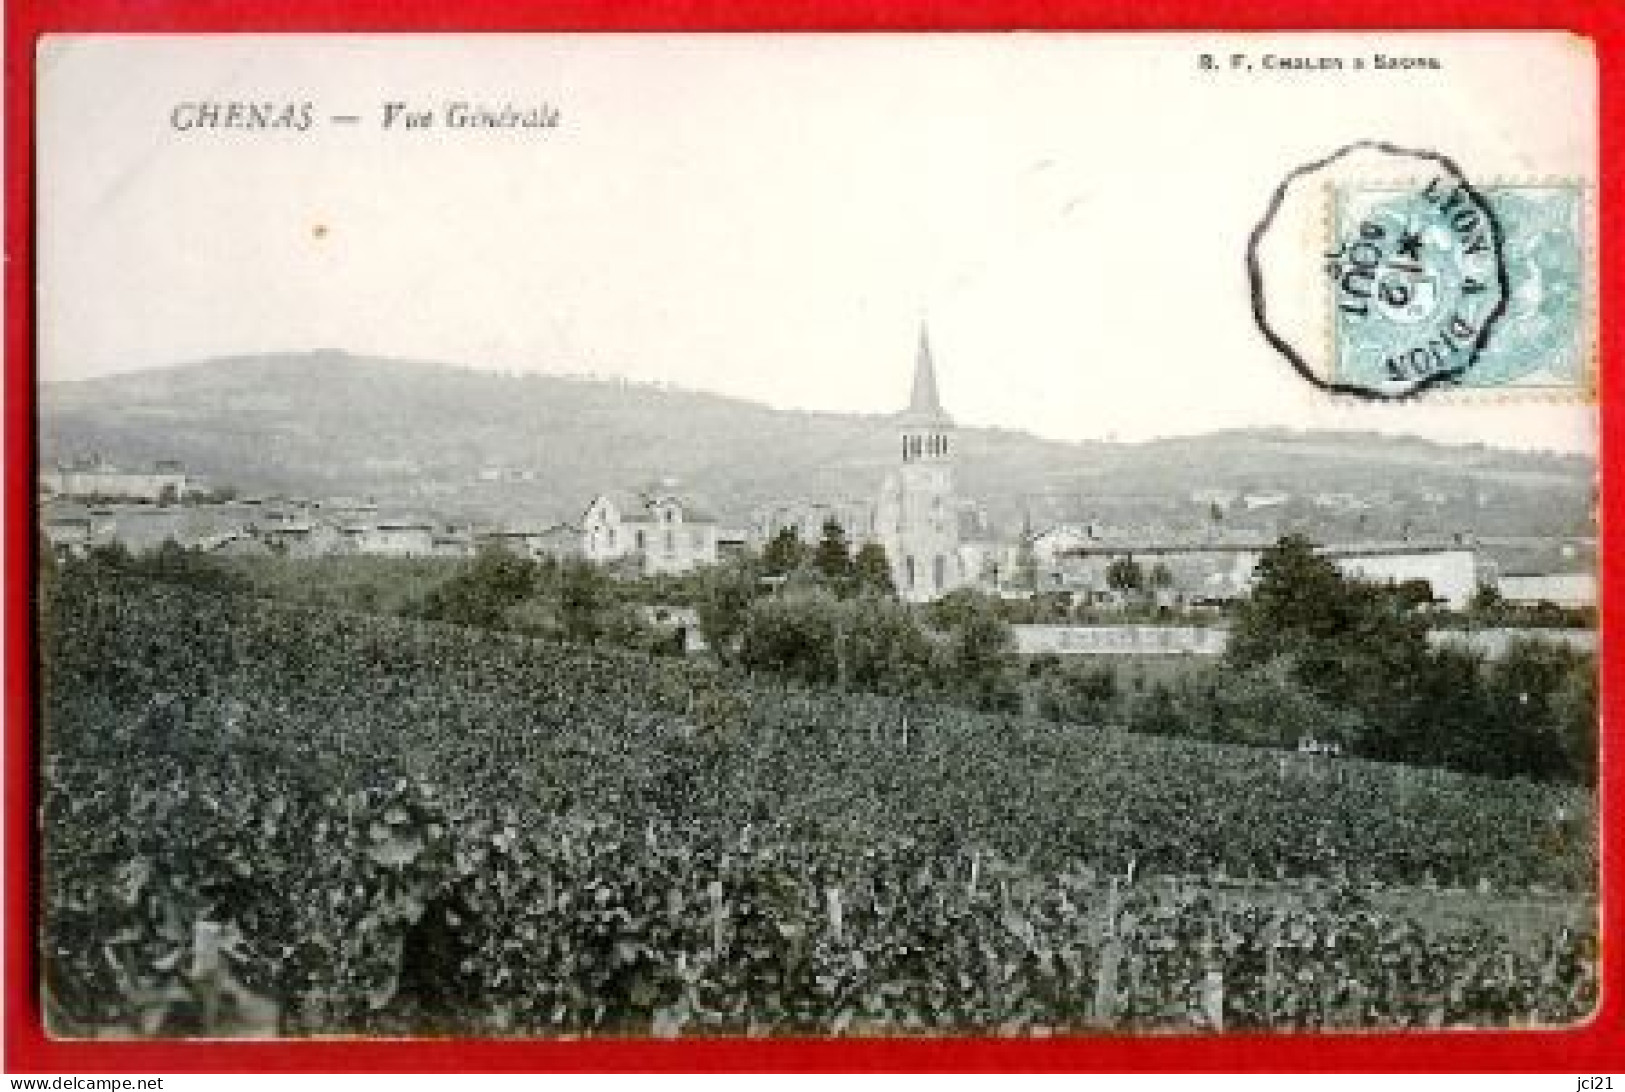 69 - RHÔNE -CHENAS - VUE GÉNÉRALE - CPA - CACHET AMBULANT LYON À DIJON (191)_CP130 - Chenas